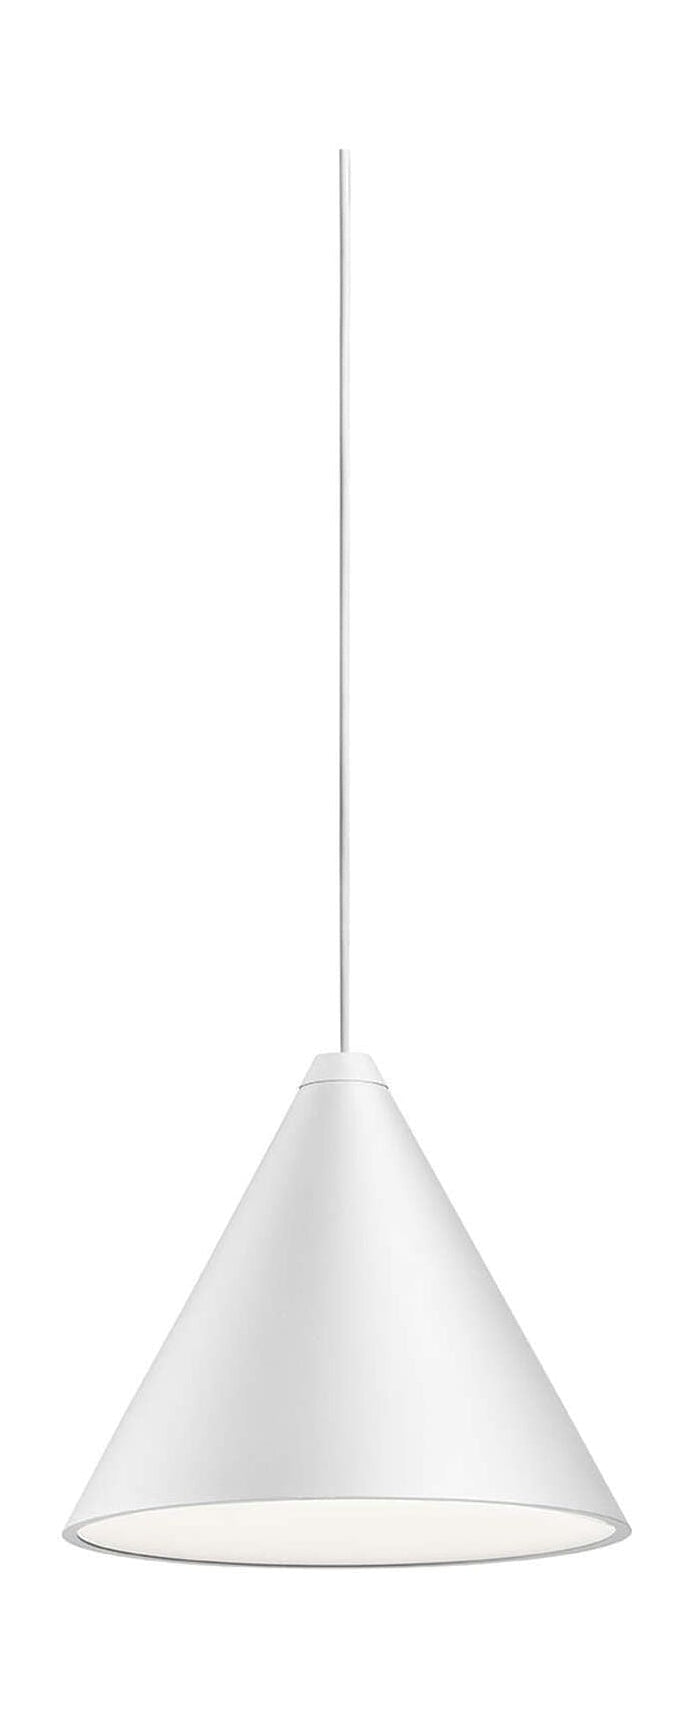 Flos String Light Cone Head Pendant lampe Bluetooth 22 m, blanc